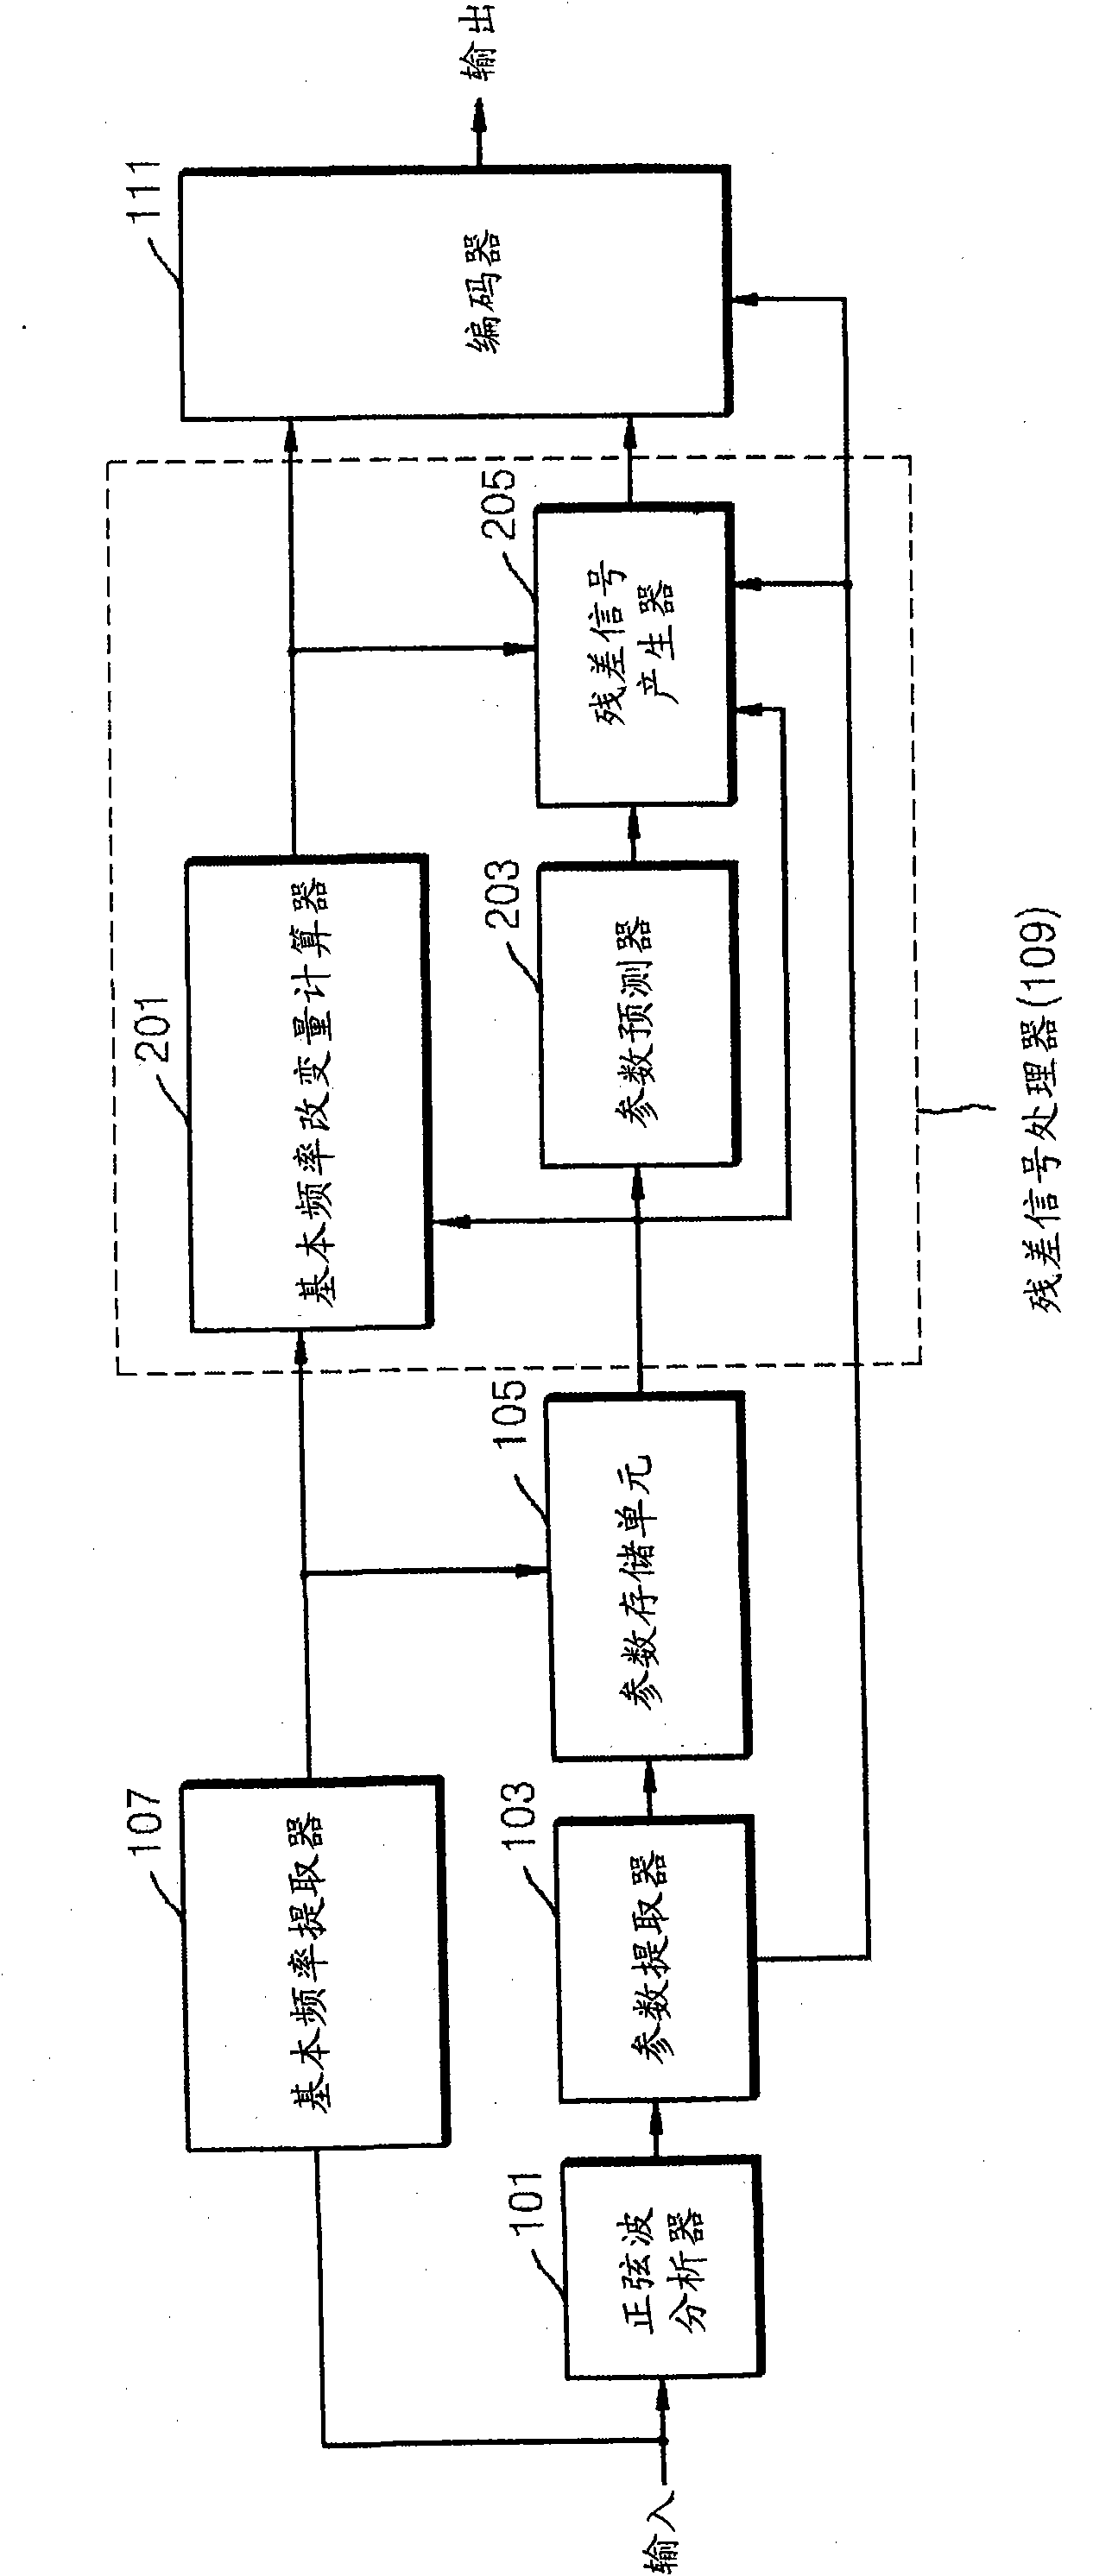 Method and apparatus for encoding/decoding media signal